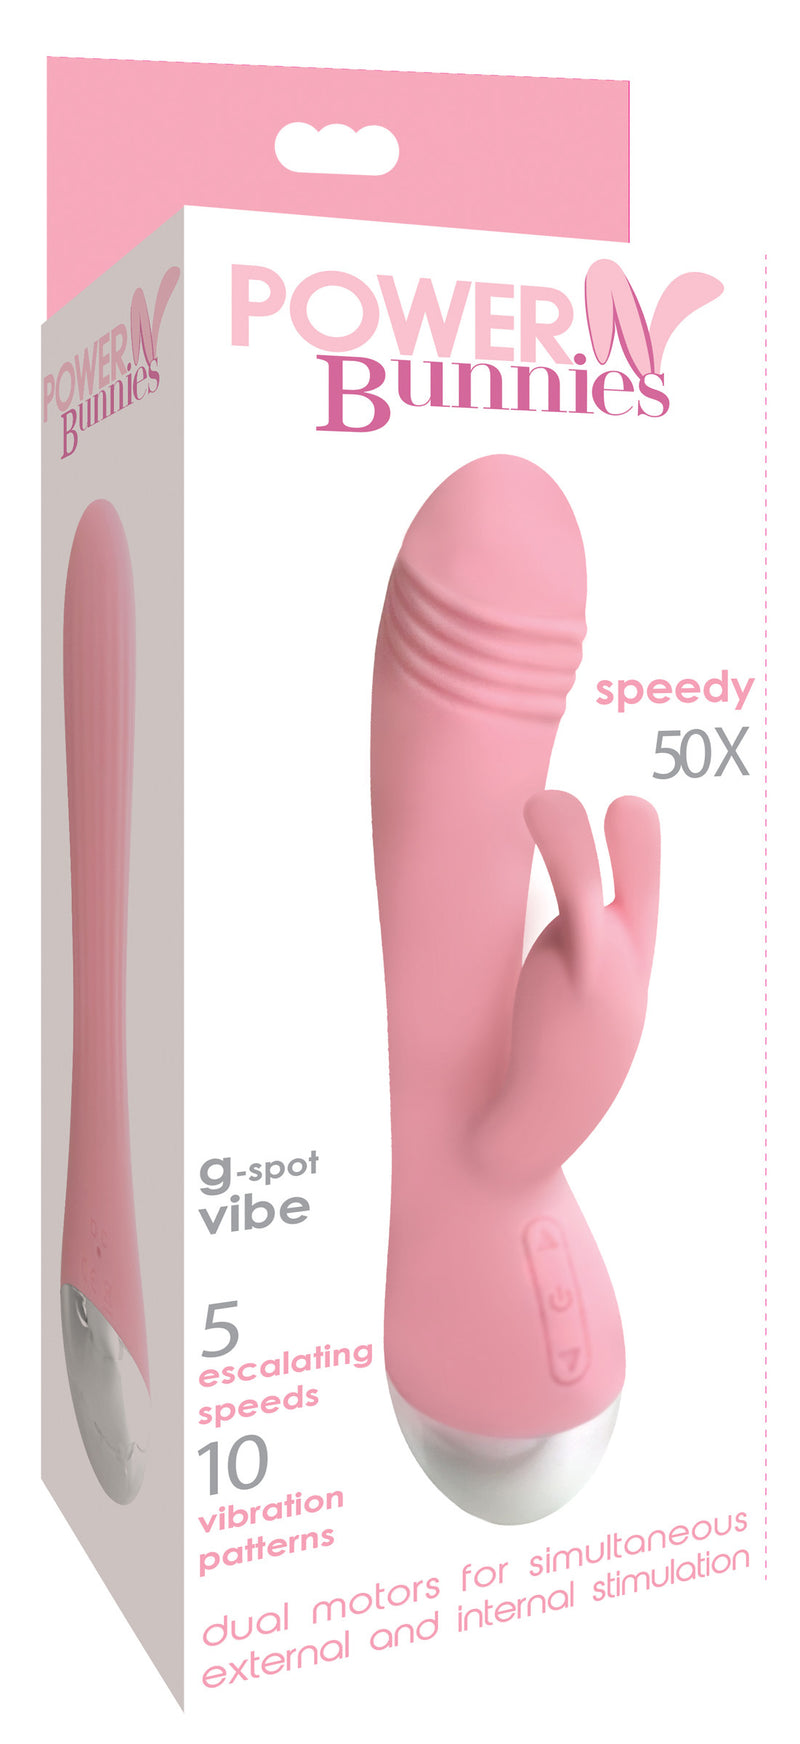 Speedy 50X Silicone Rabbit Vibrator Rabbits from Power Bunnies